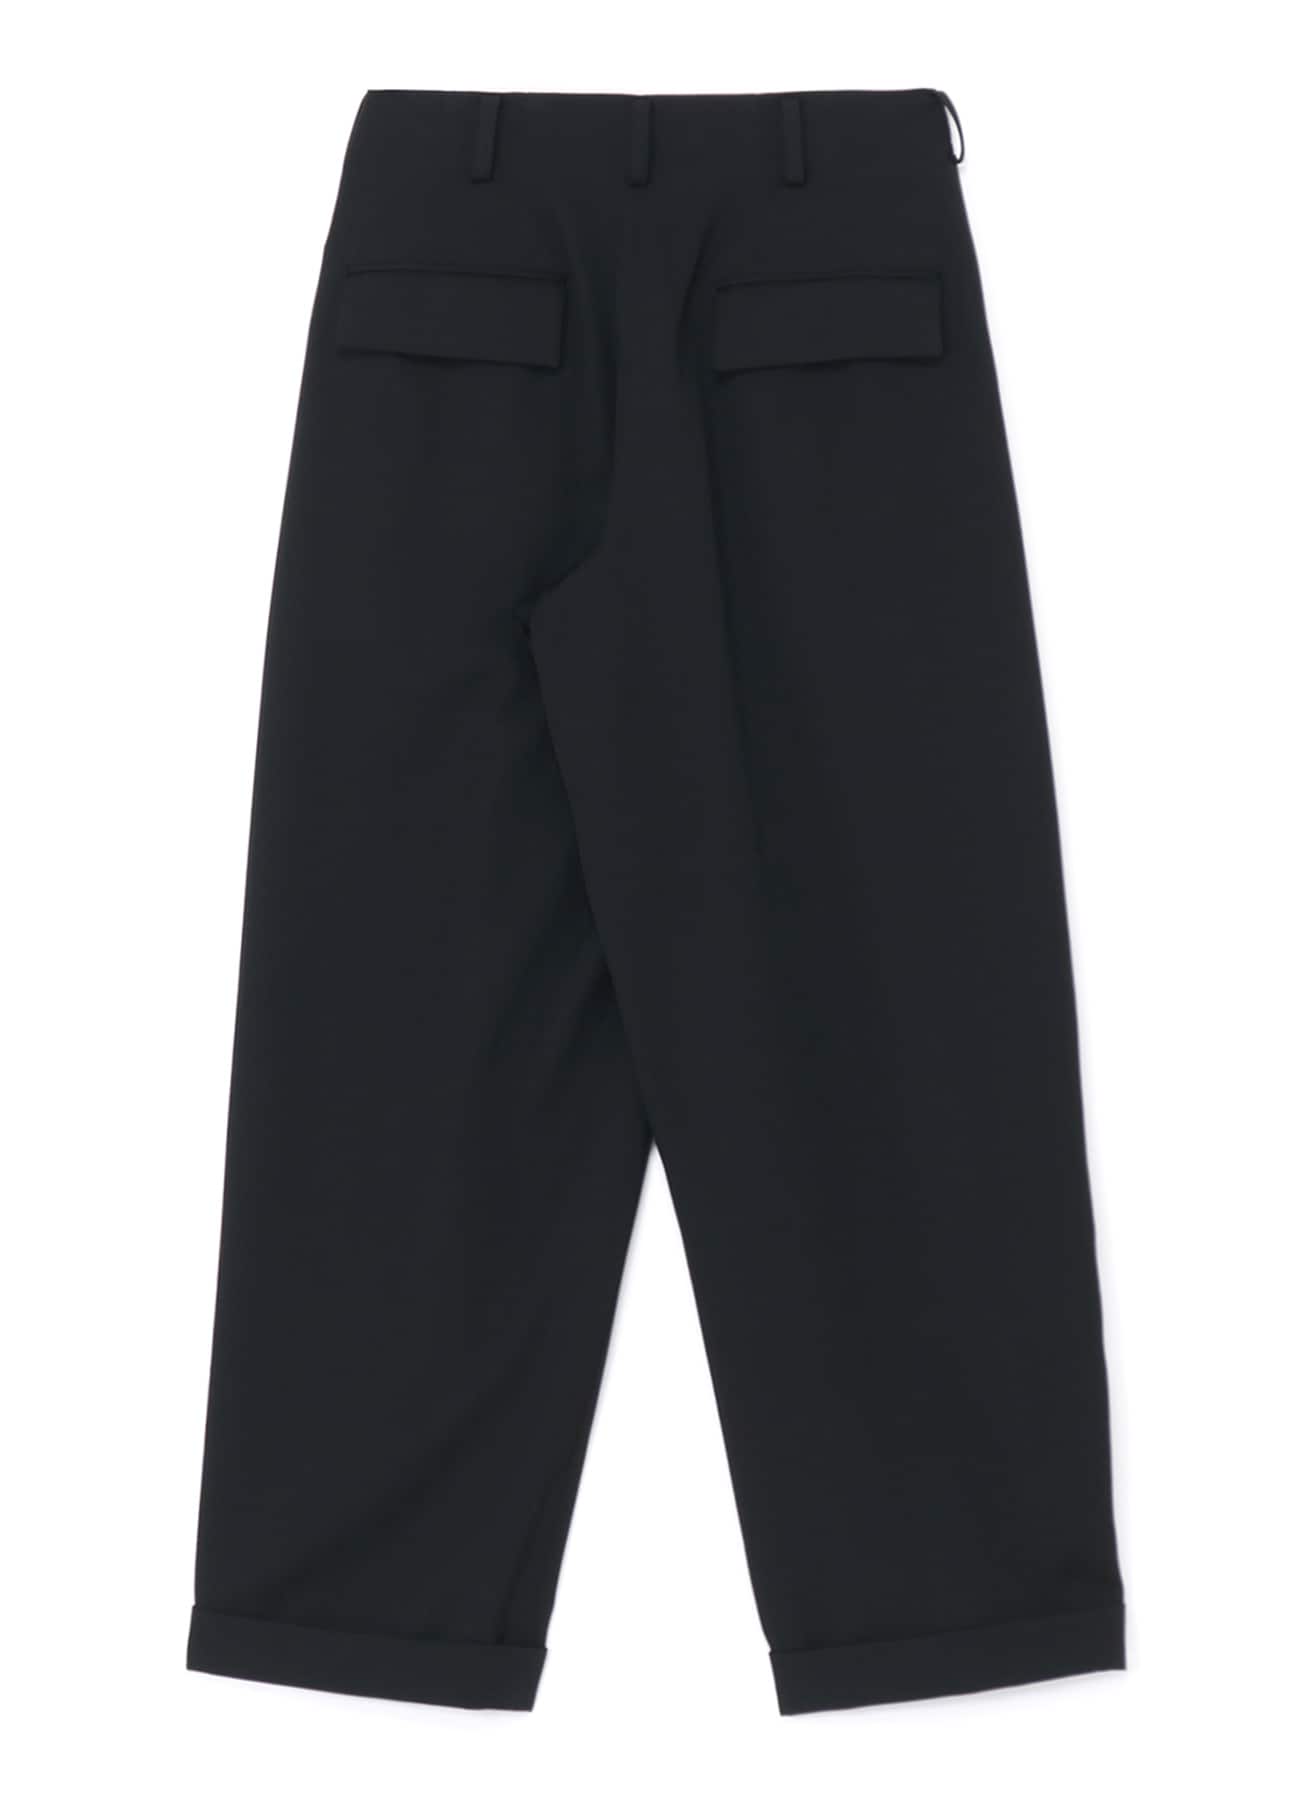 ATM Black Cotton Mid Rise Cuffed Hem Trousers Skinny Fit Size 8 | eBay